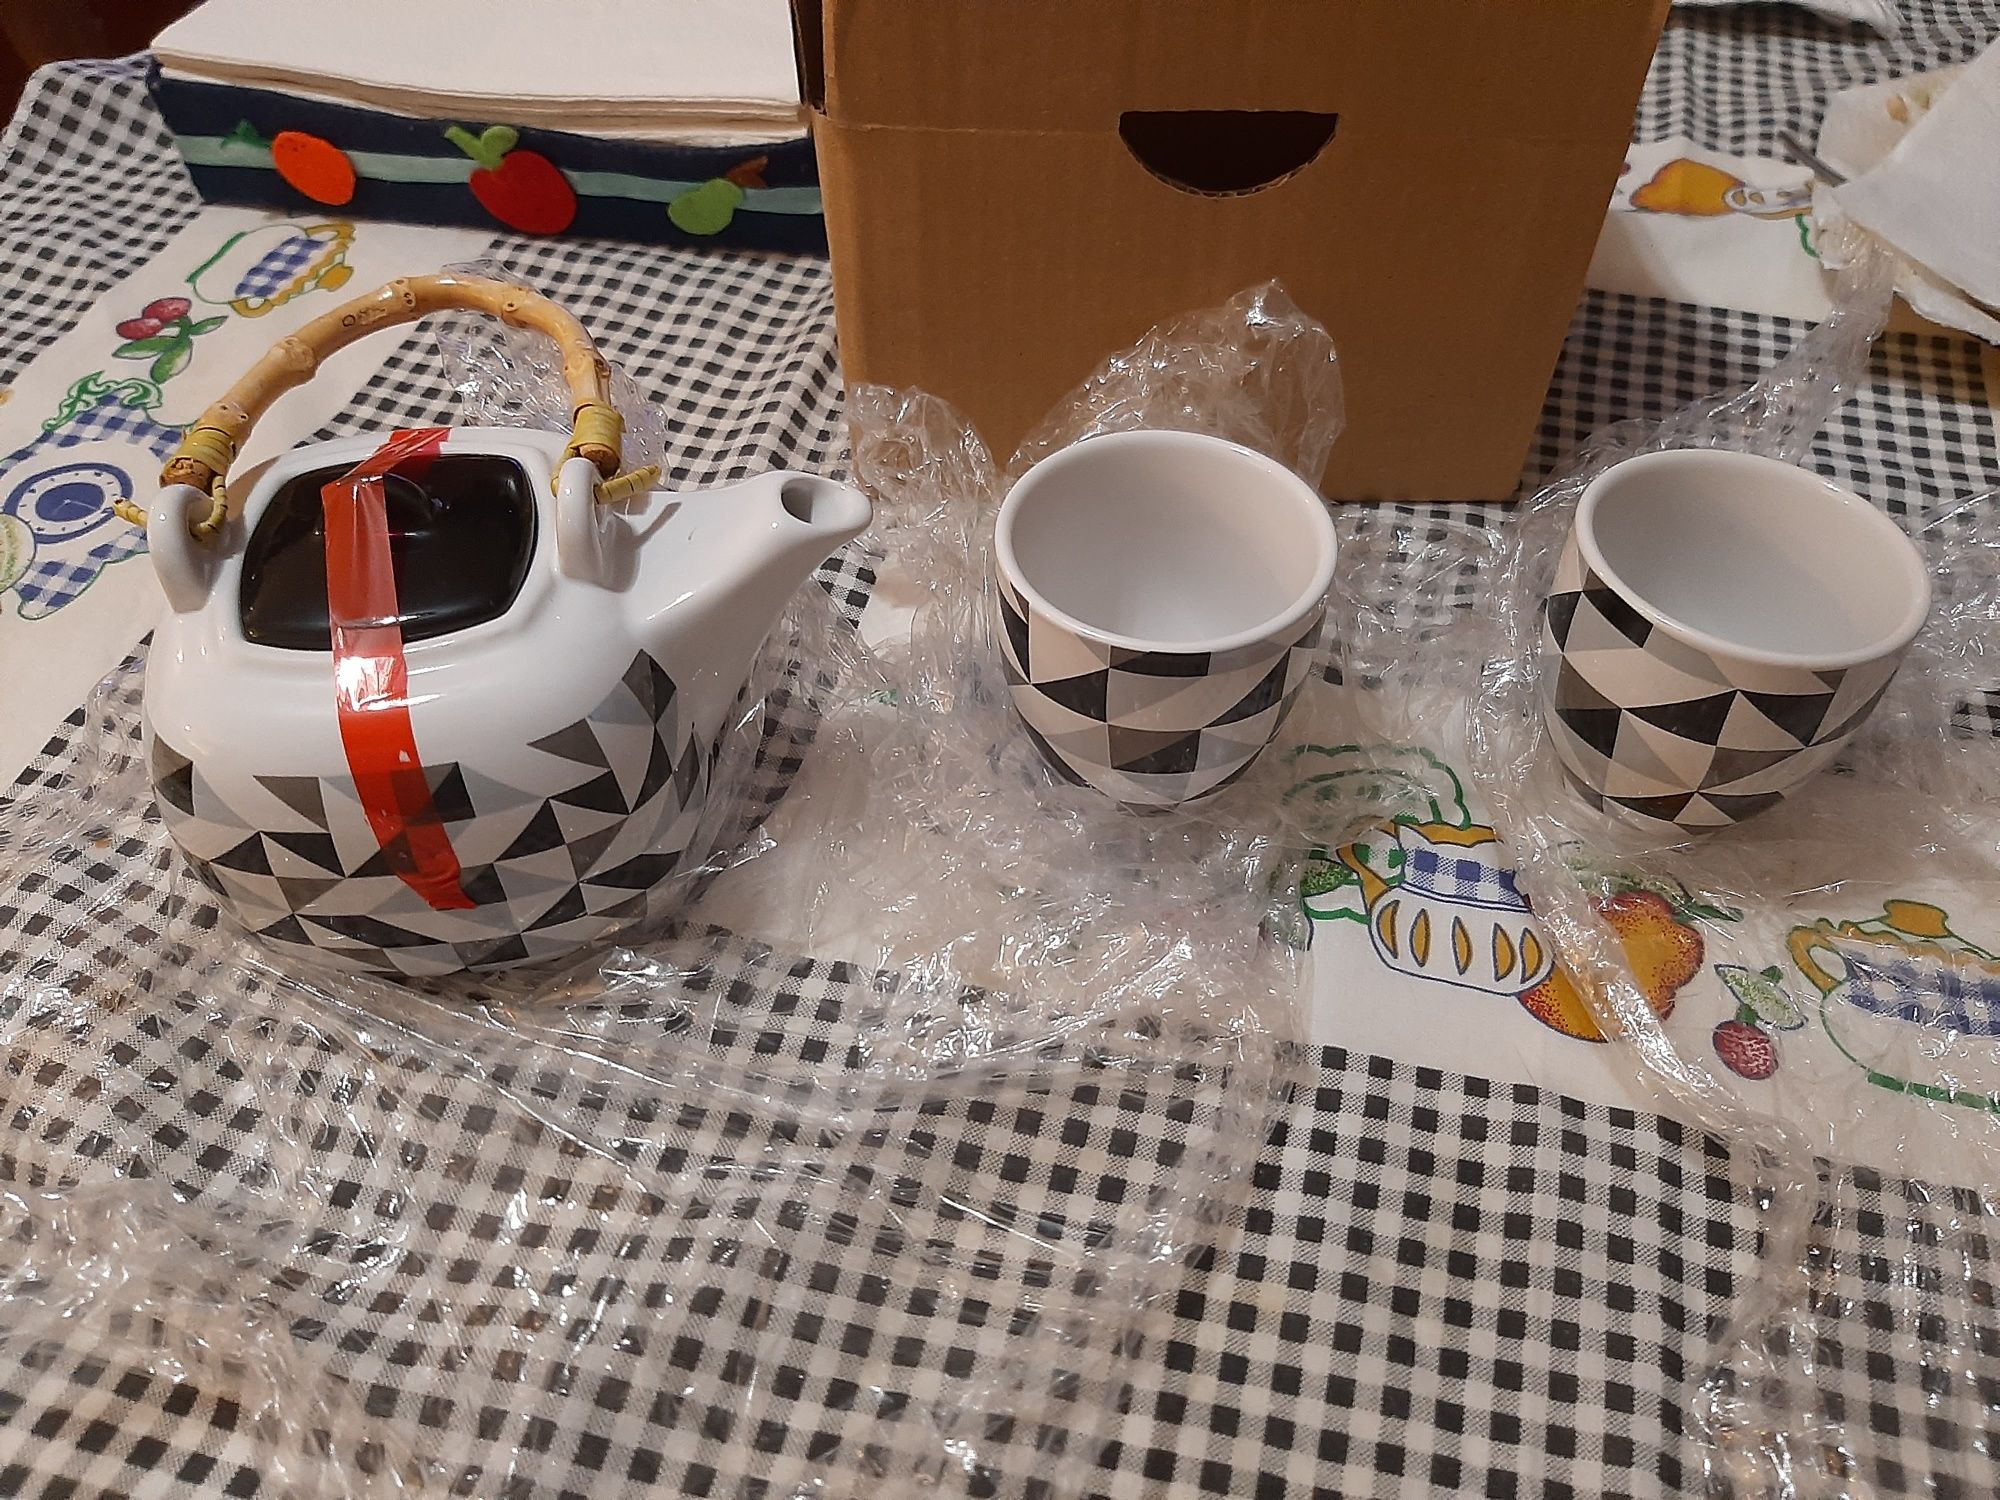 conjunto de chá japonês